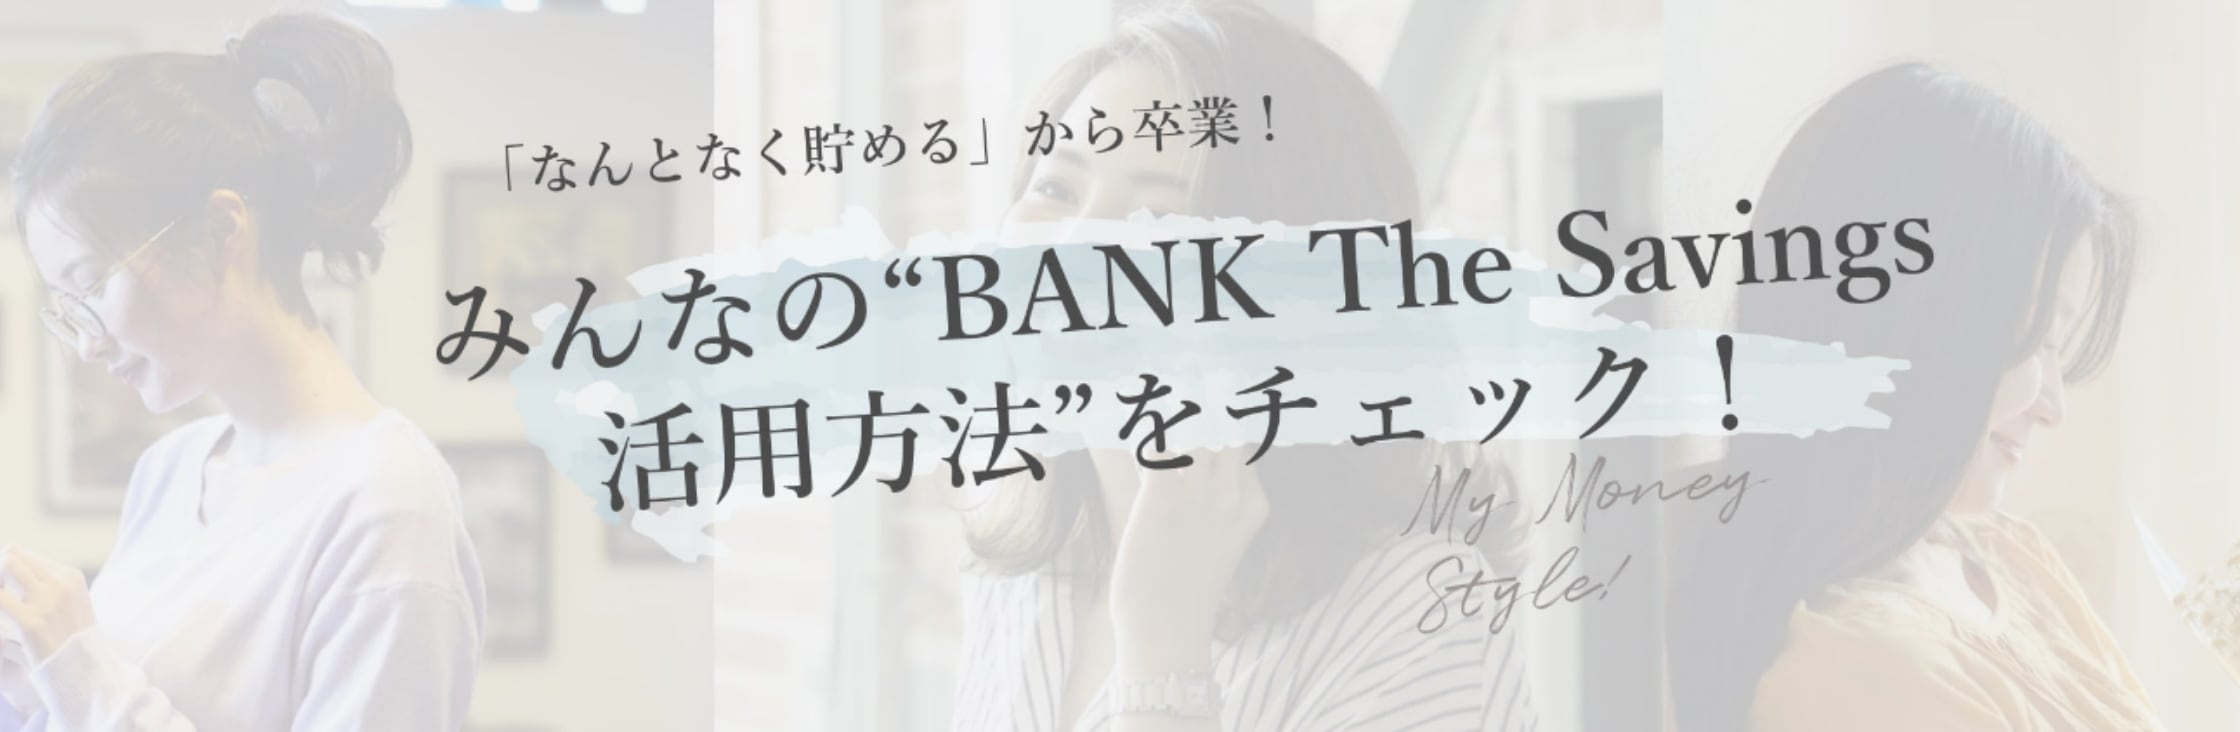 BANK The Savingsに関する画像